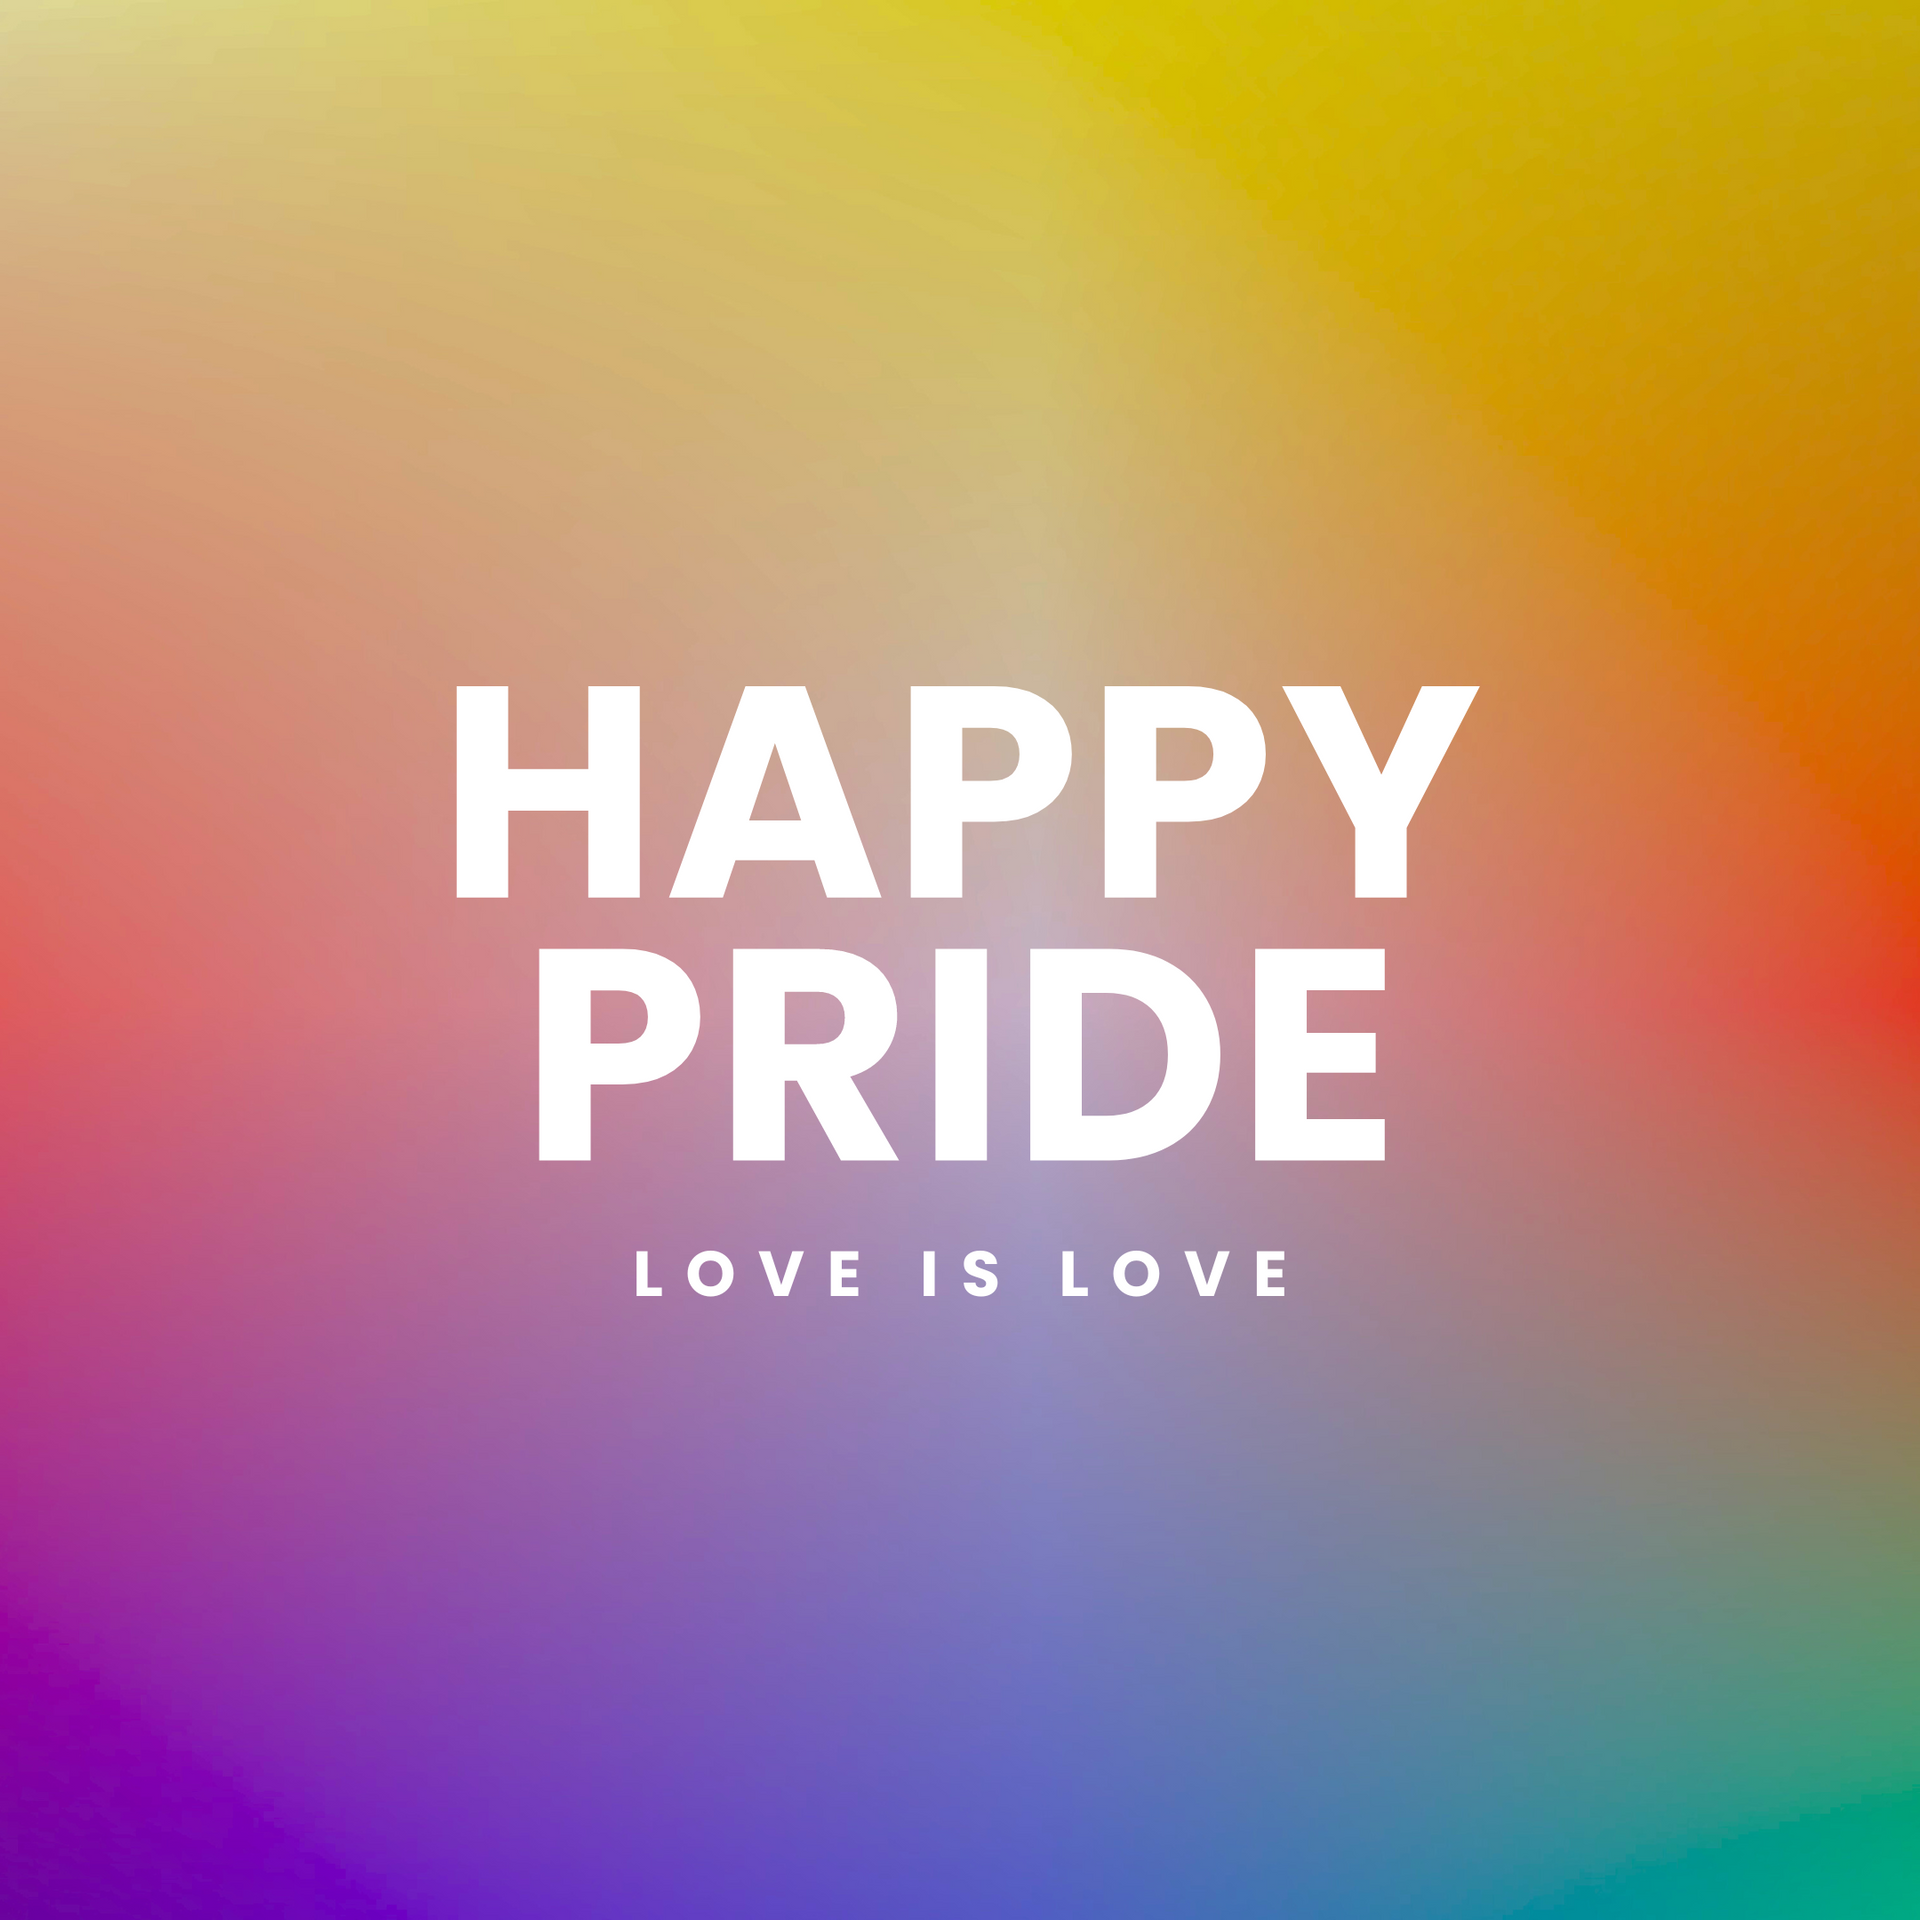 Happy pride: love is love